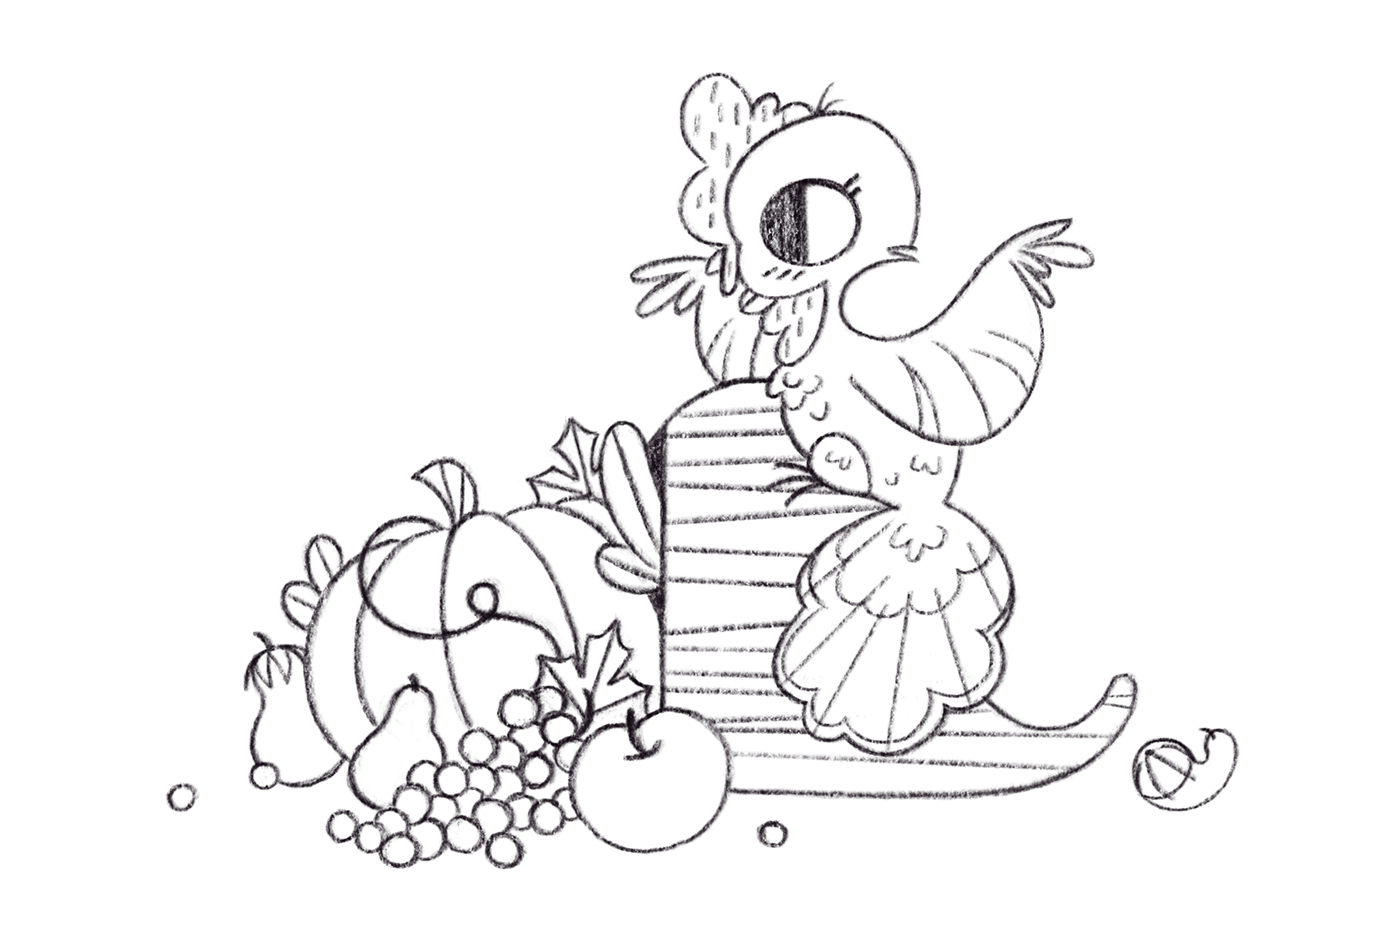 Turkey thanksgiving Gobble cornucopia pumpkin Fruit Vegtables Holiday card bird